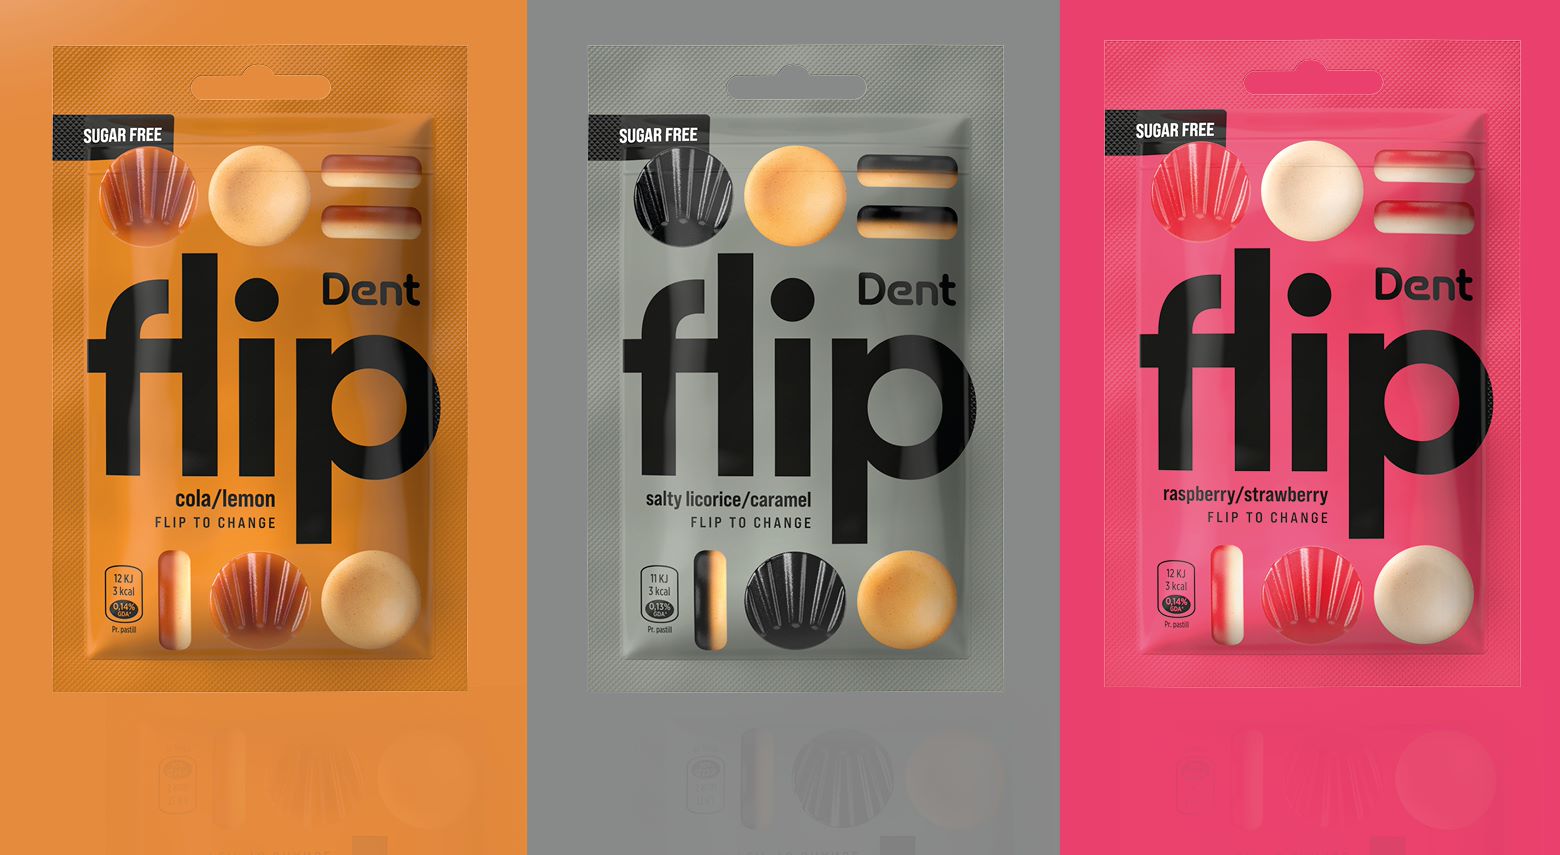 Dent Flip - Flip to change!